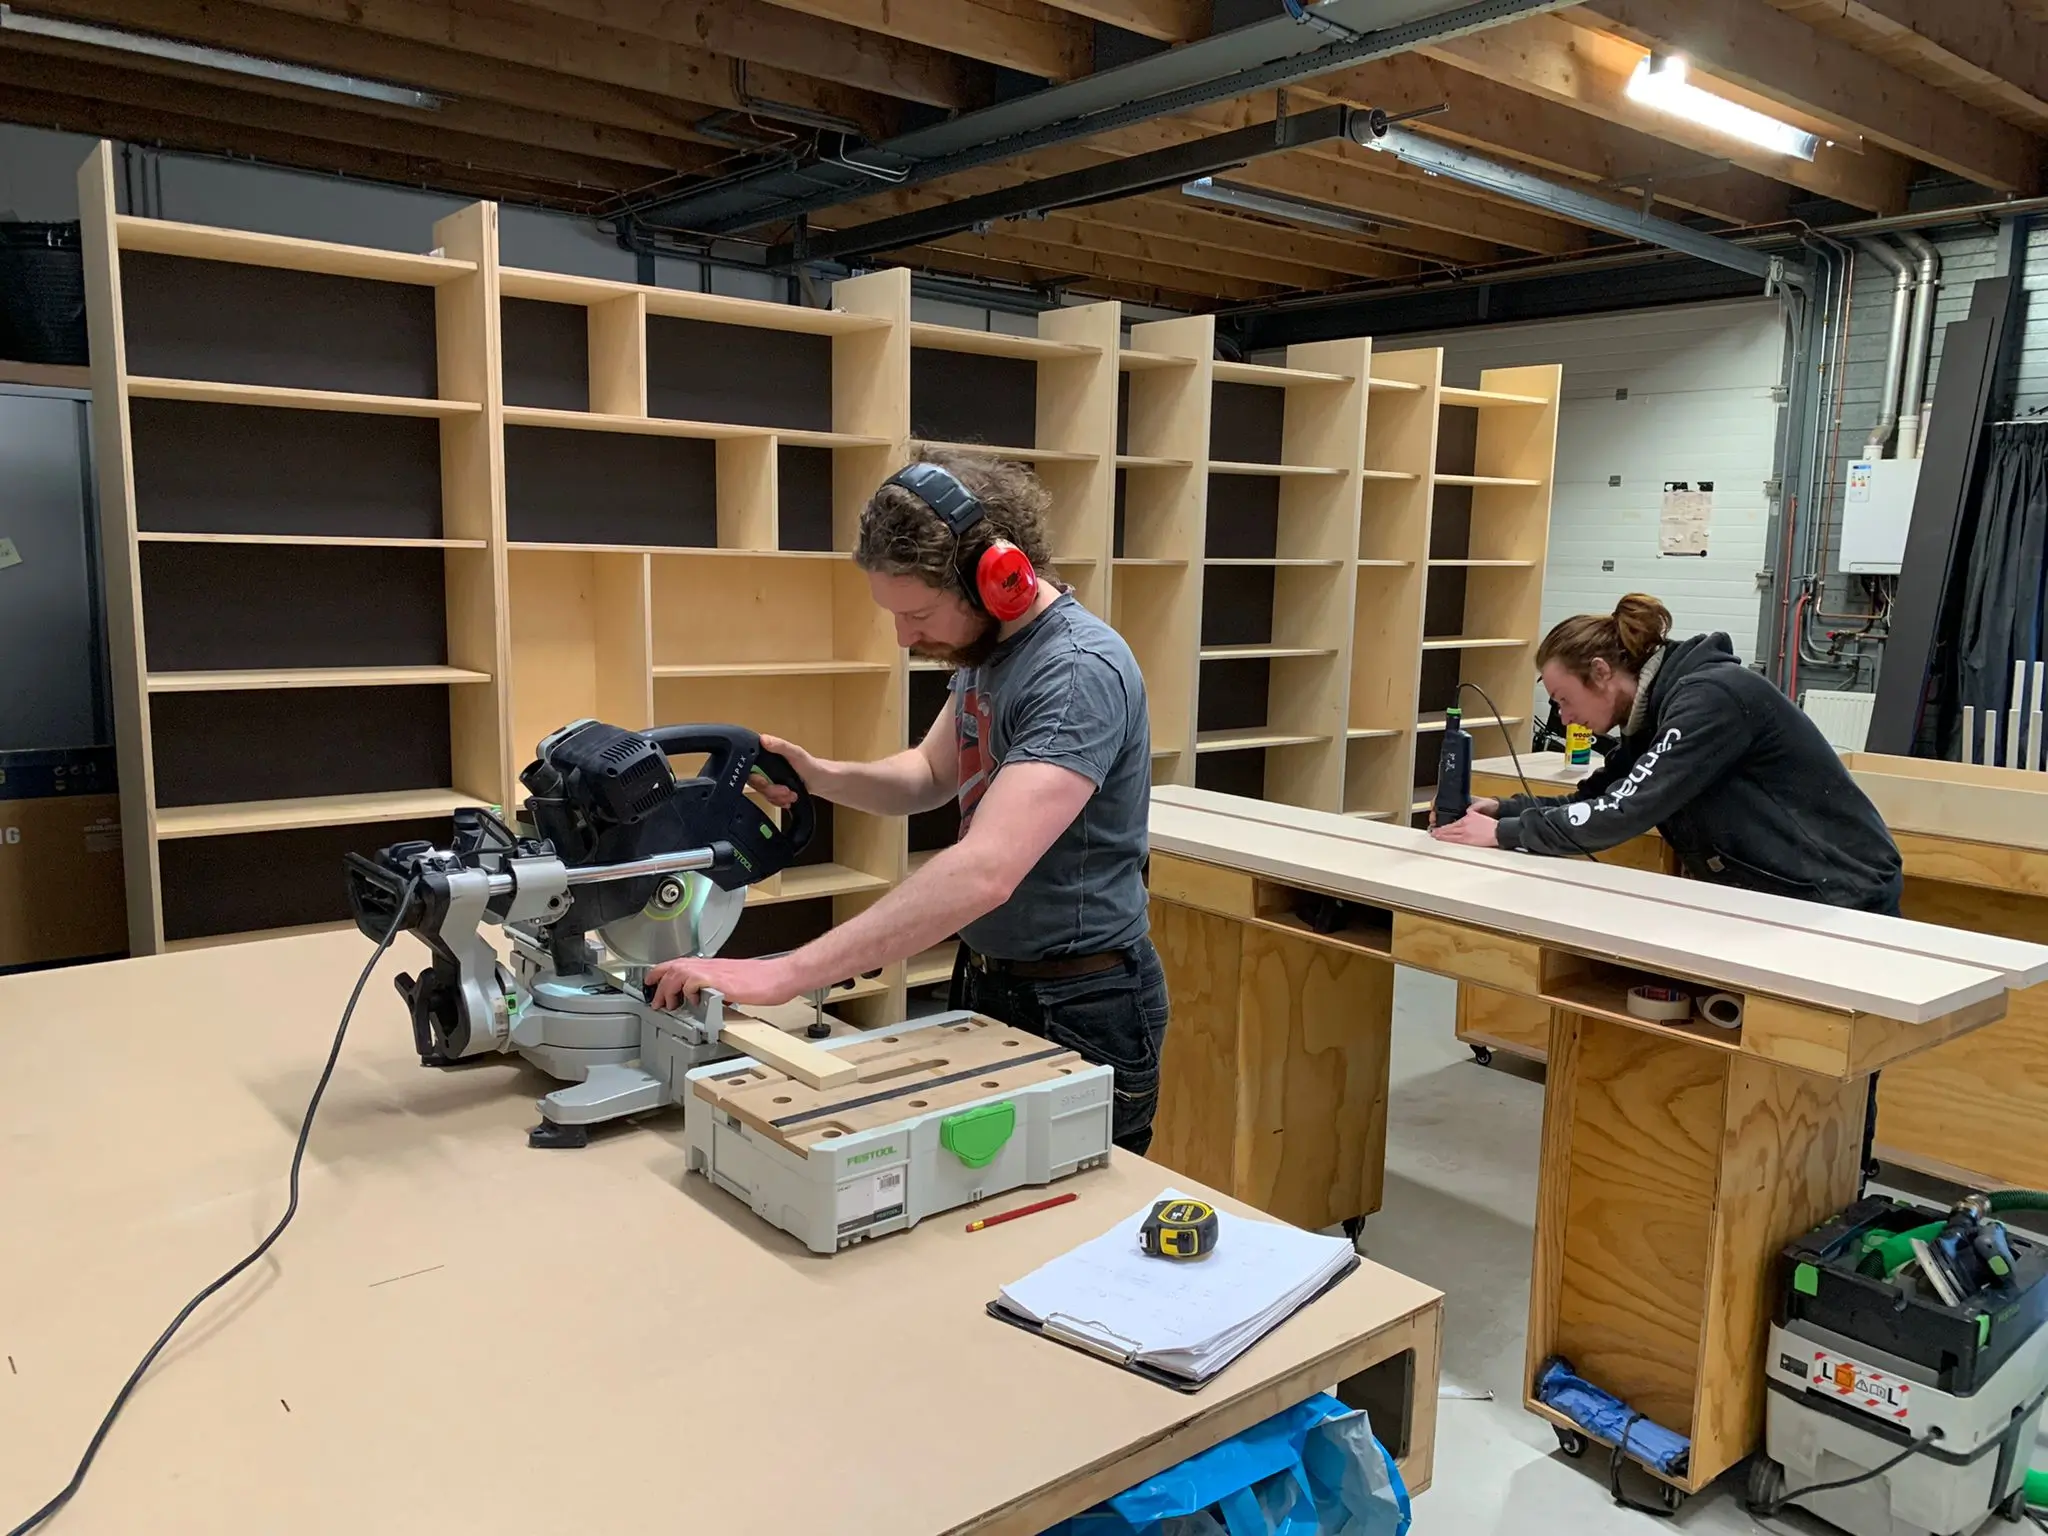 Carpenters working in a workshop. Custom bookshelves in background